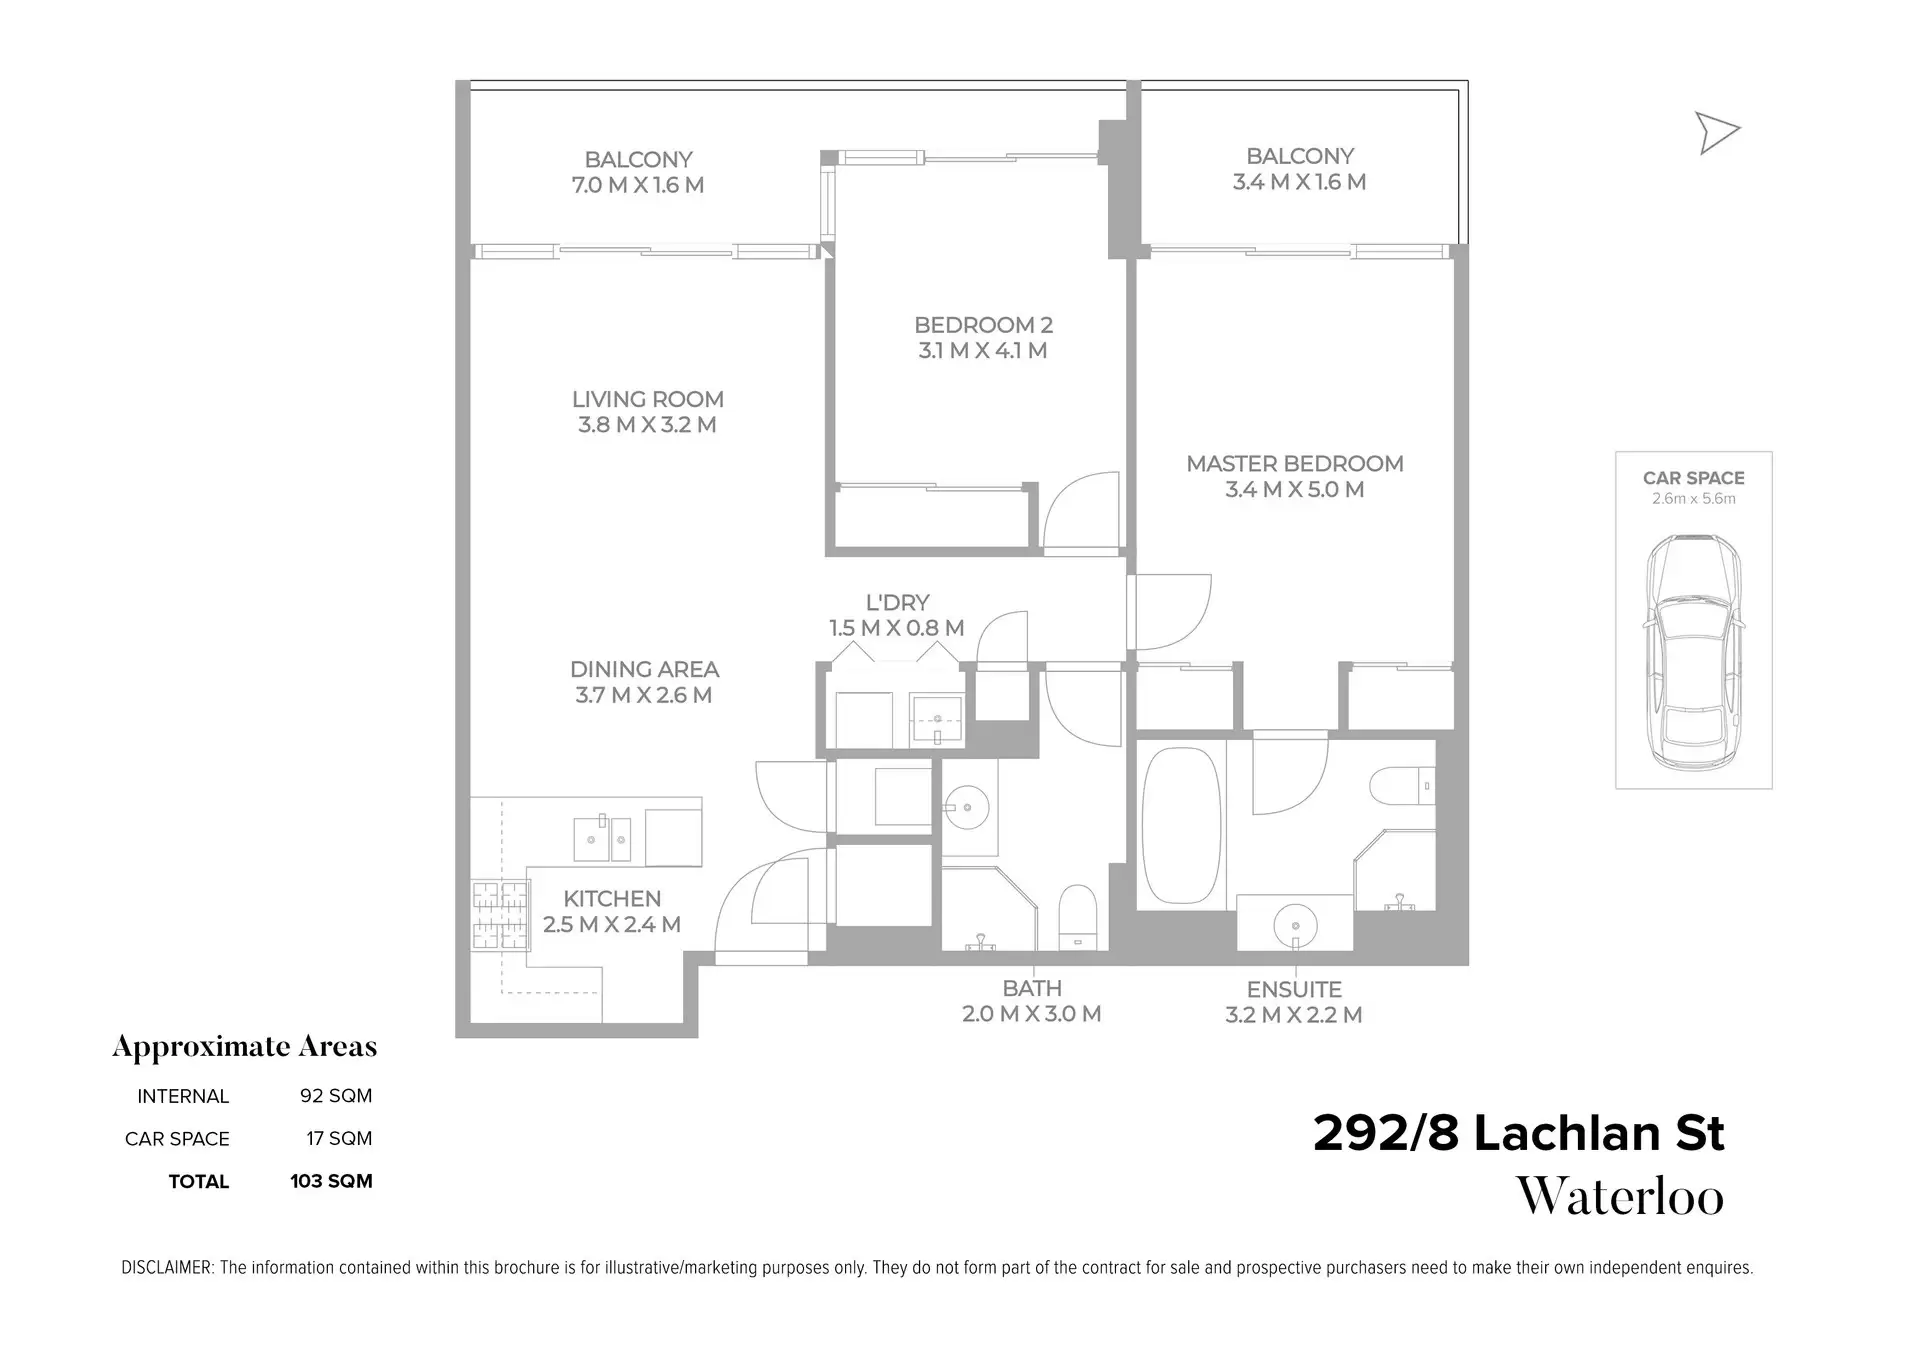 292/8 Lachlan Street, Waterloo Sold by Chidiac Realty - floorplan